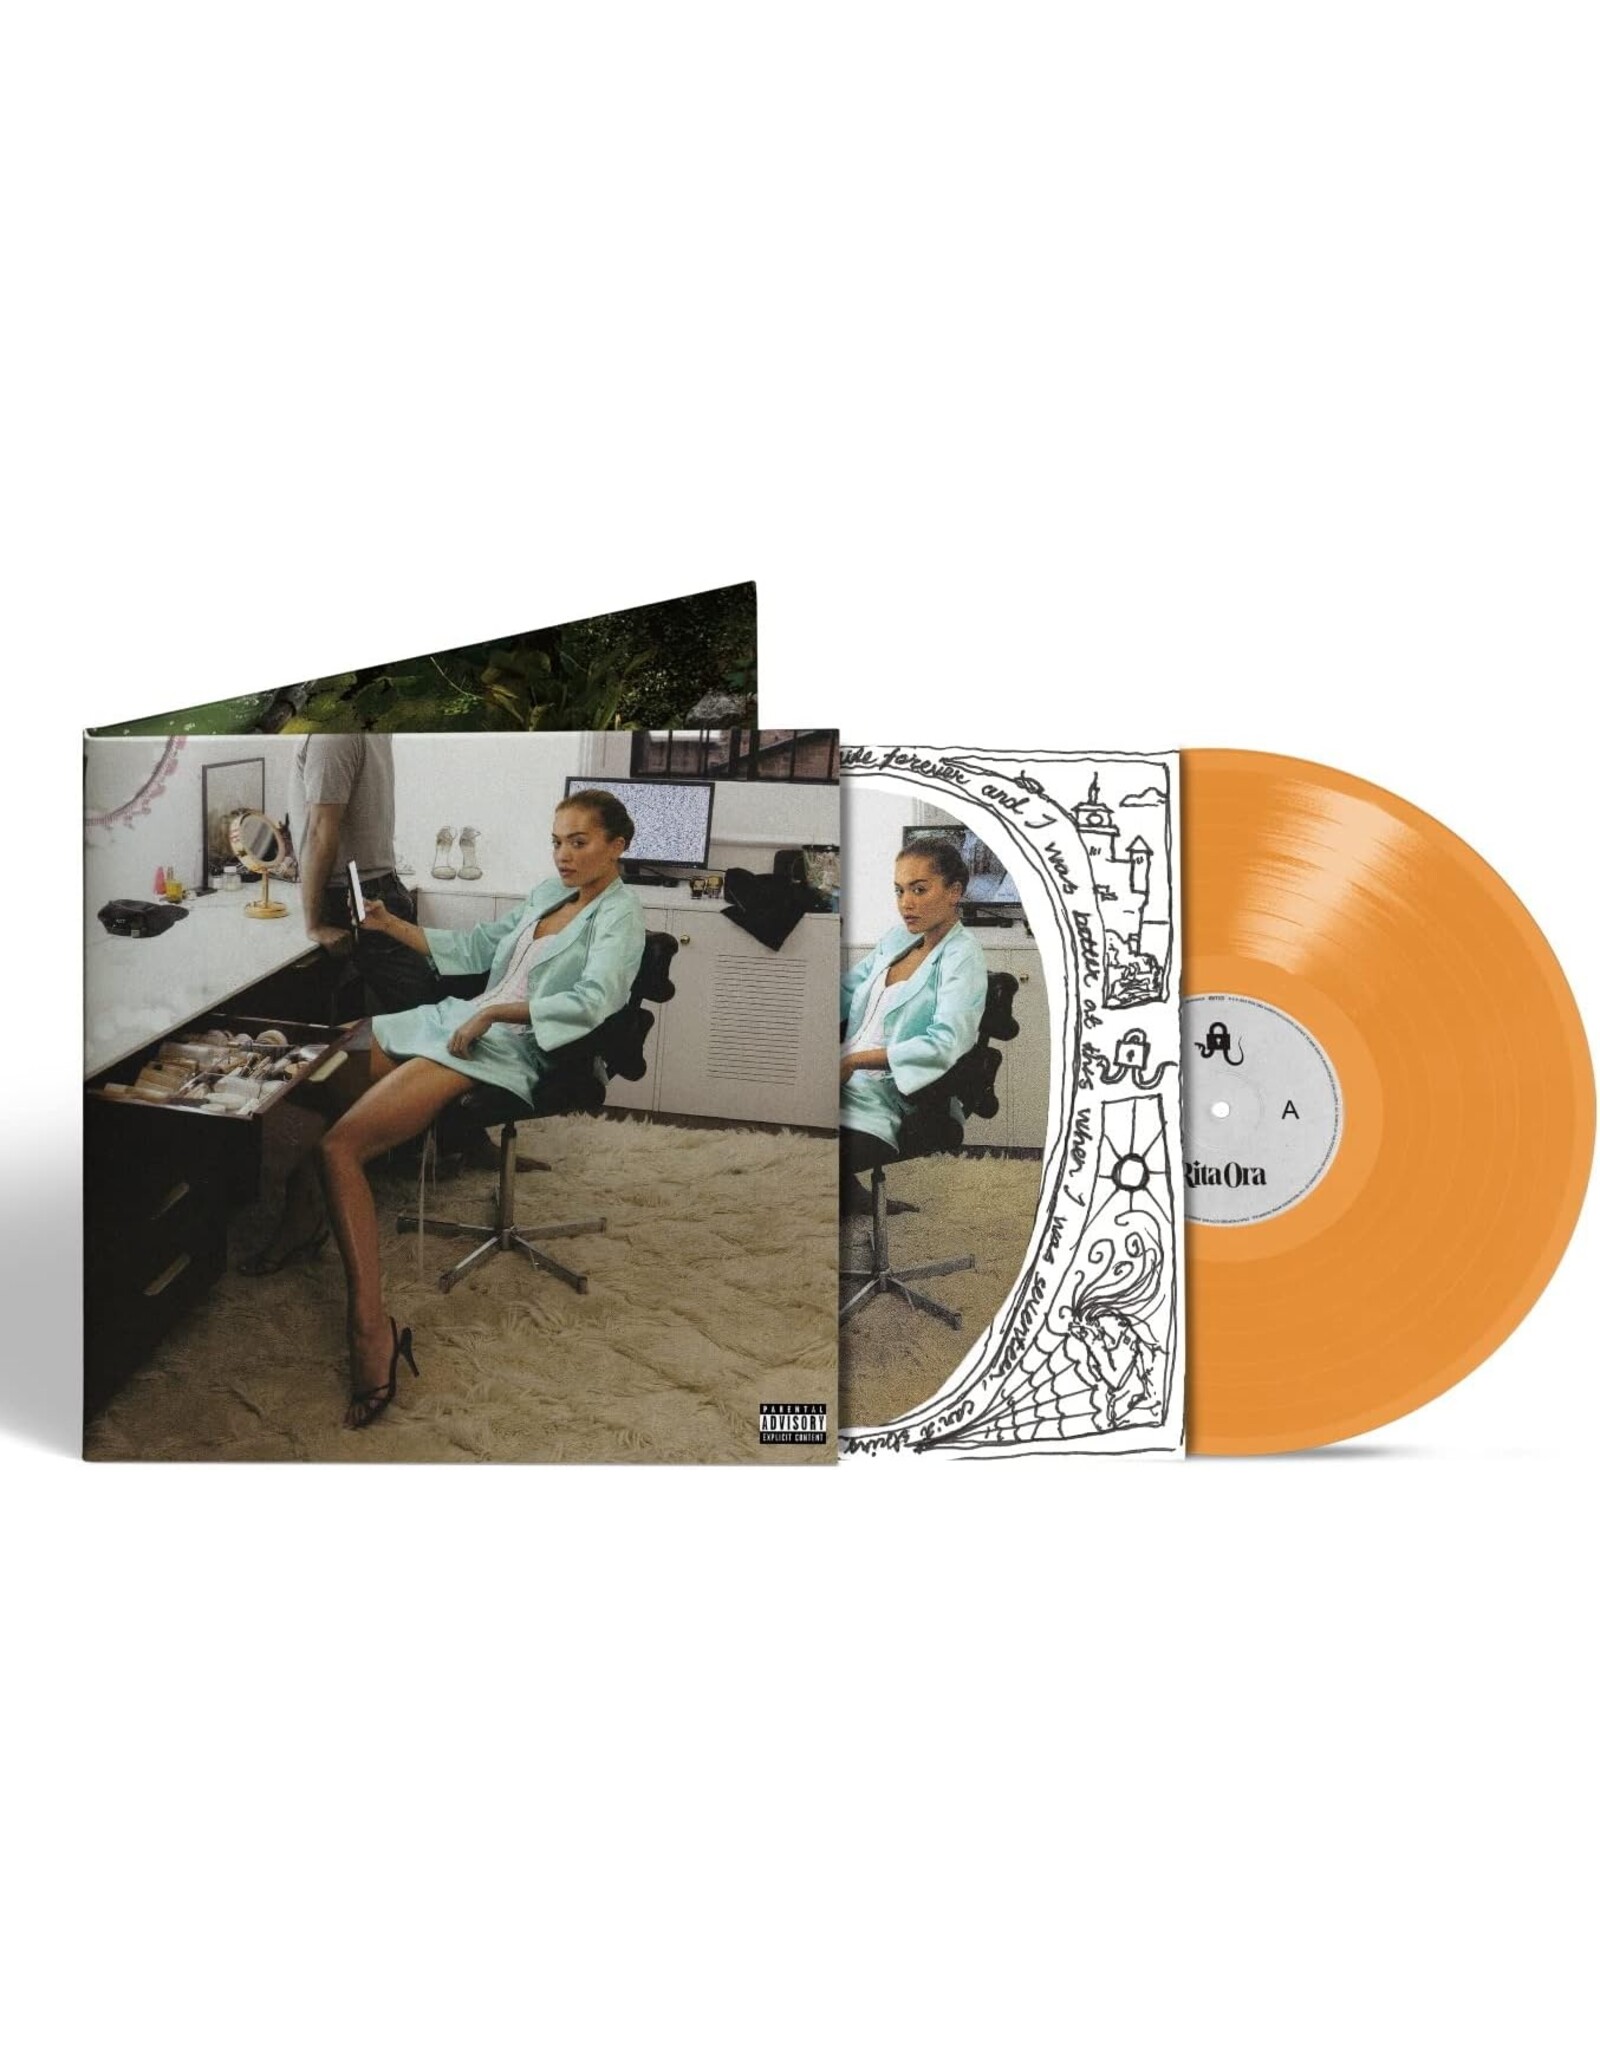 Rita Ora - Love & I (Orange Vinyl)